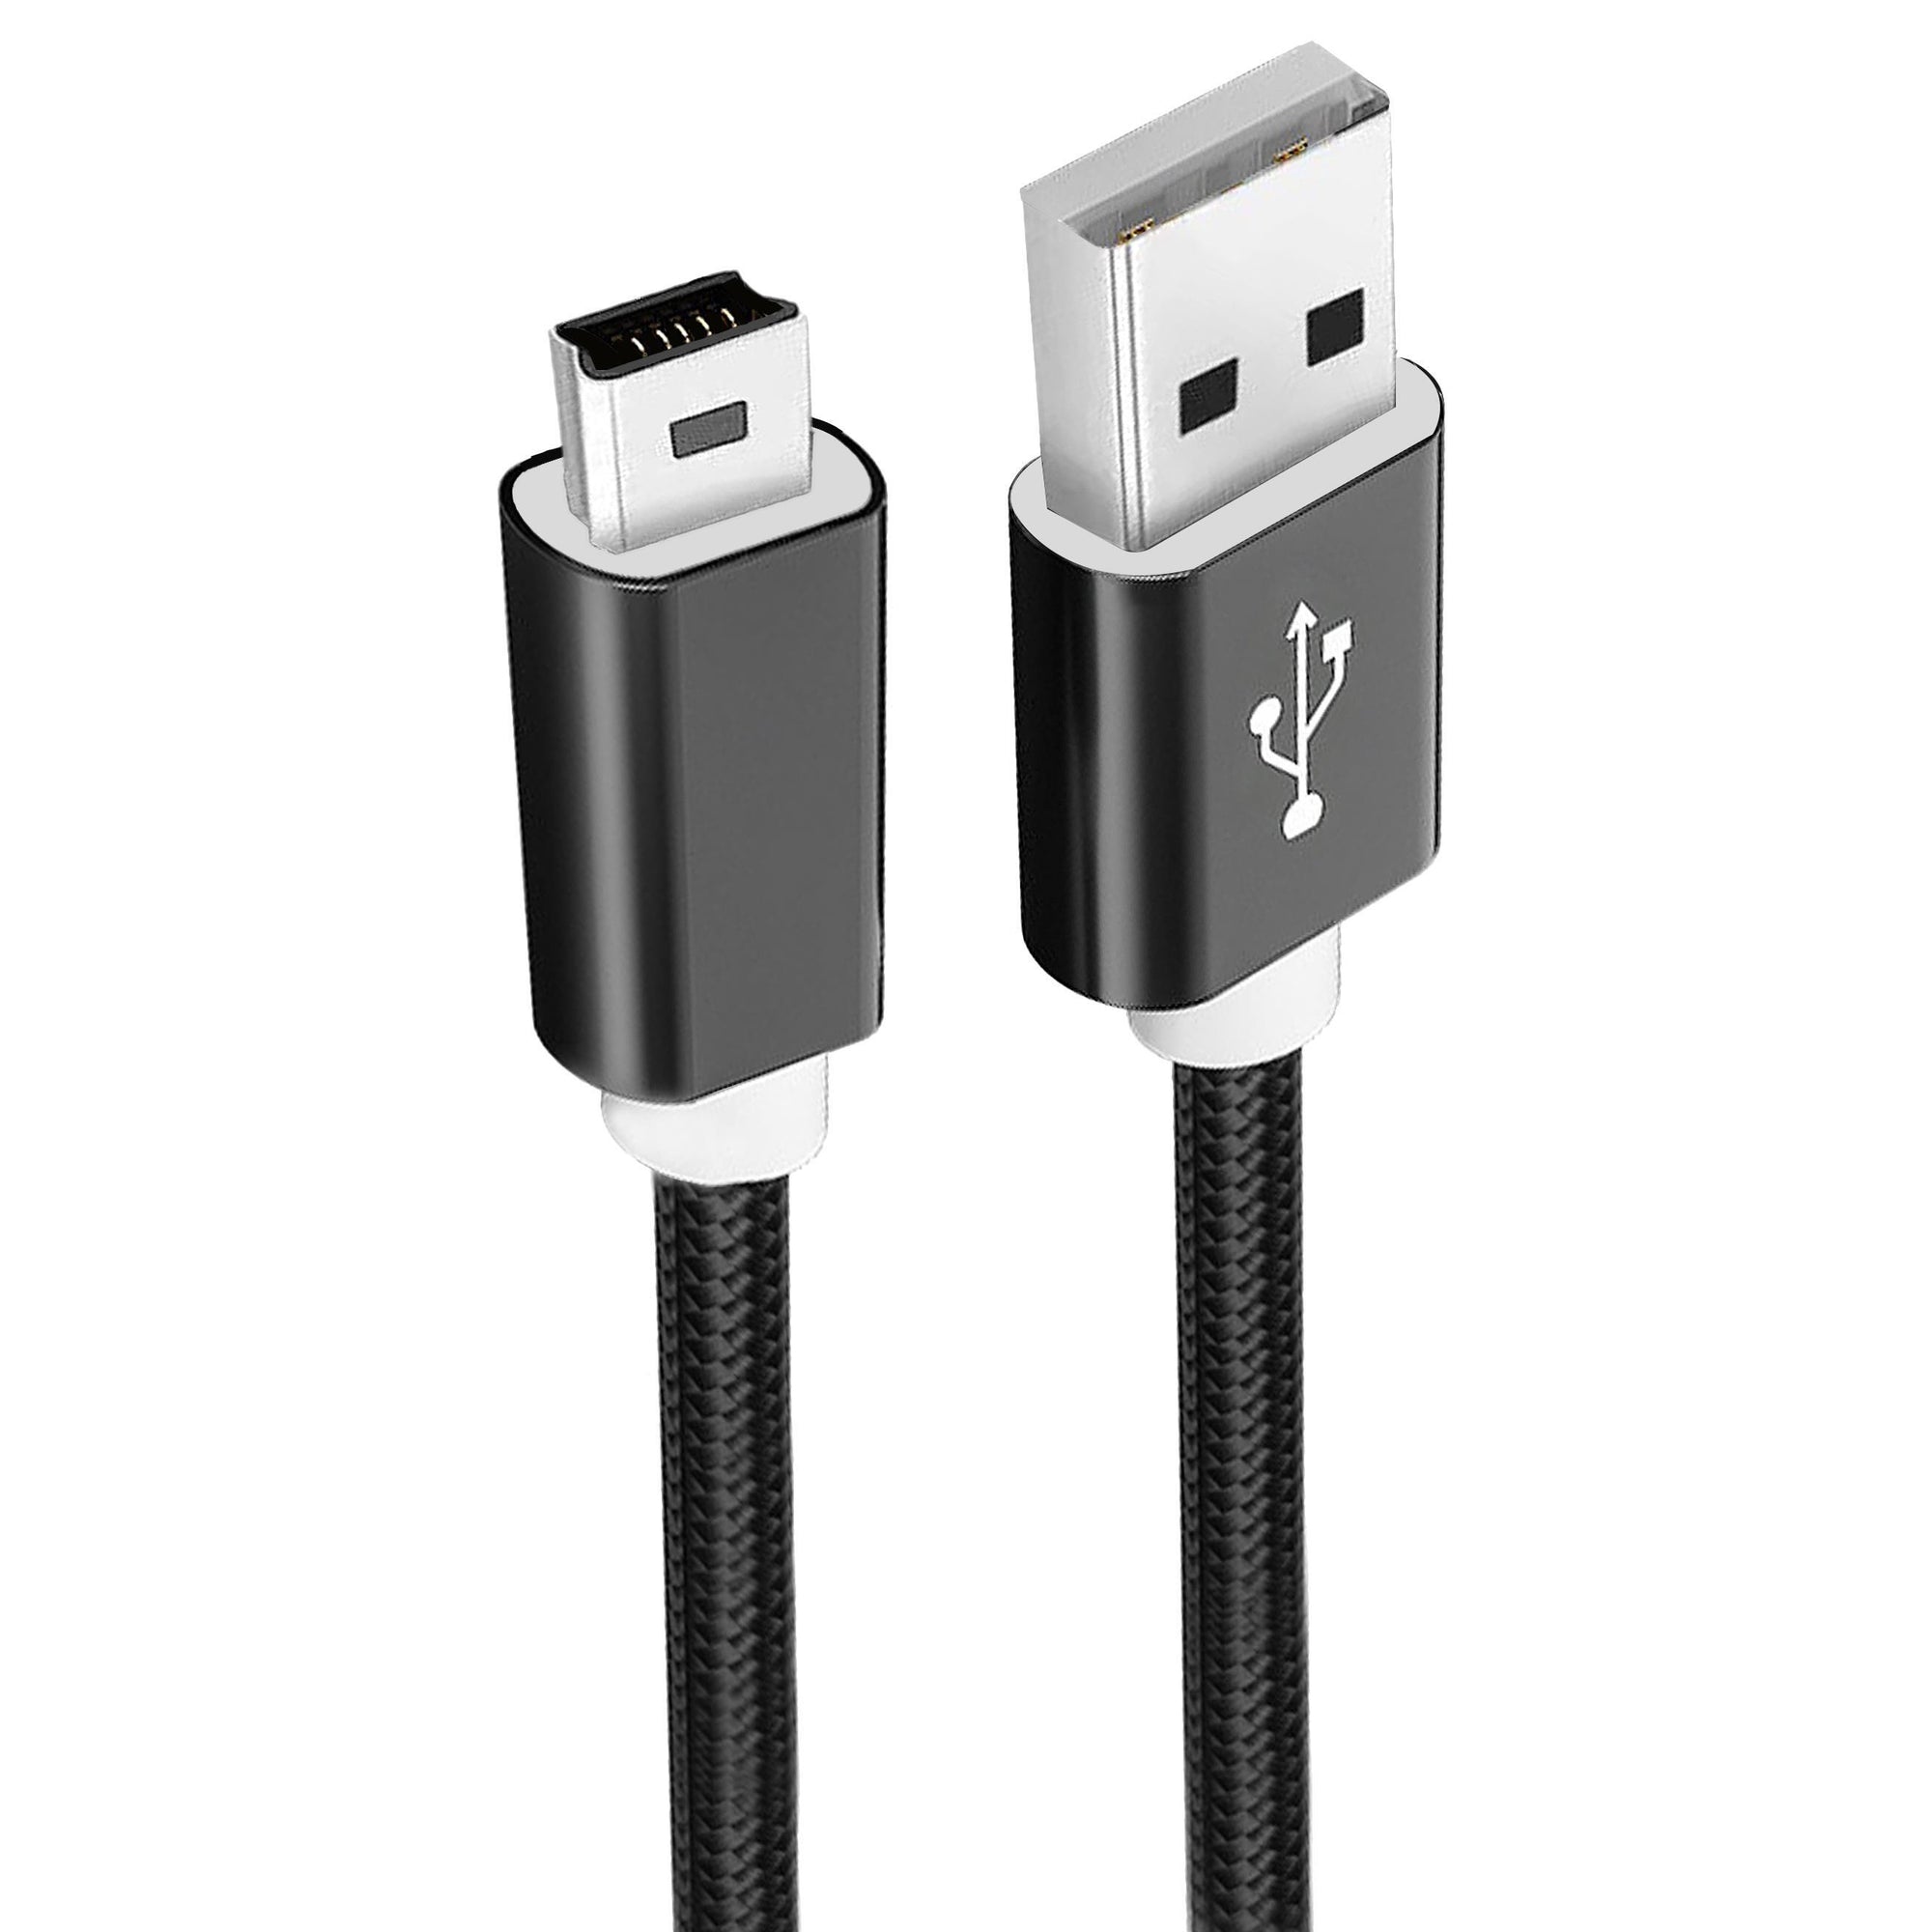 Kabel WG USB Mini na USB, 1m, černá